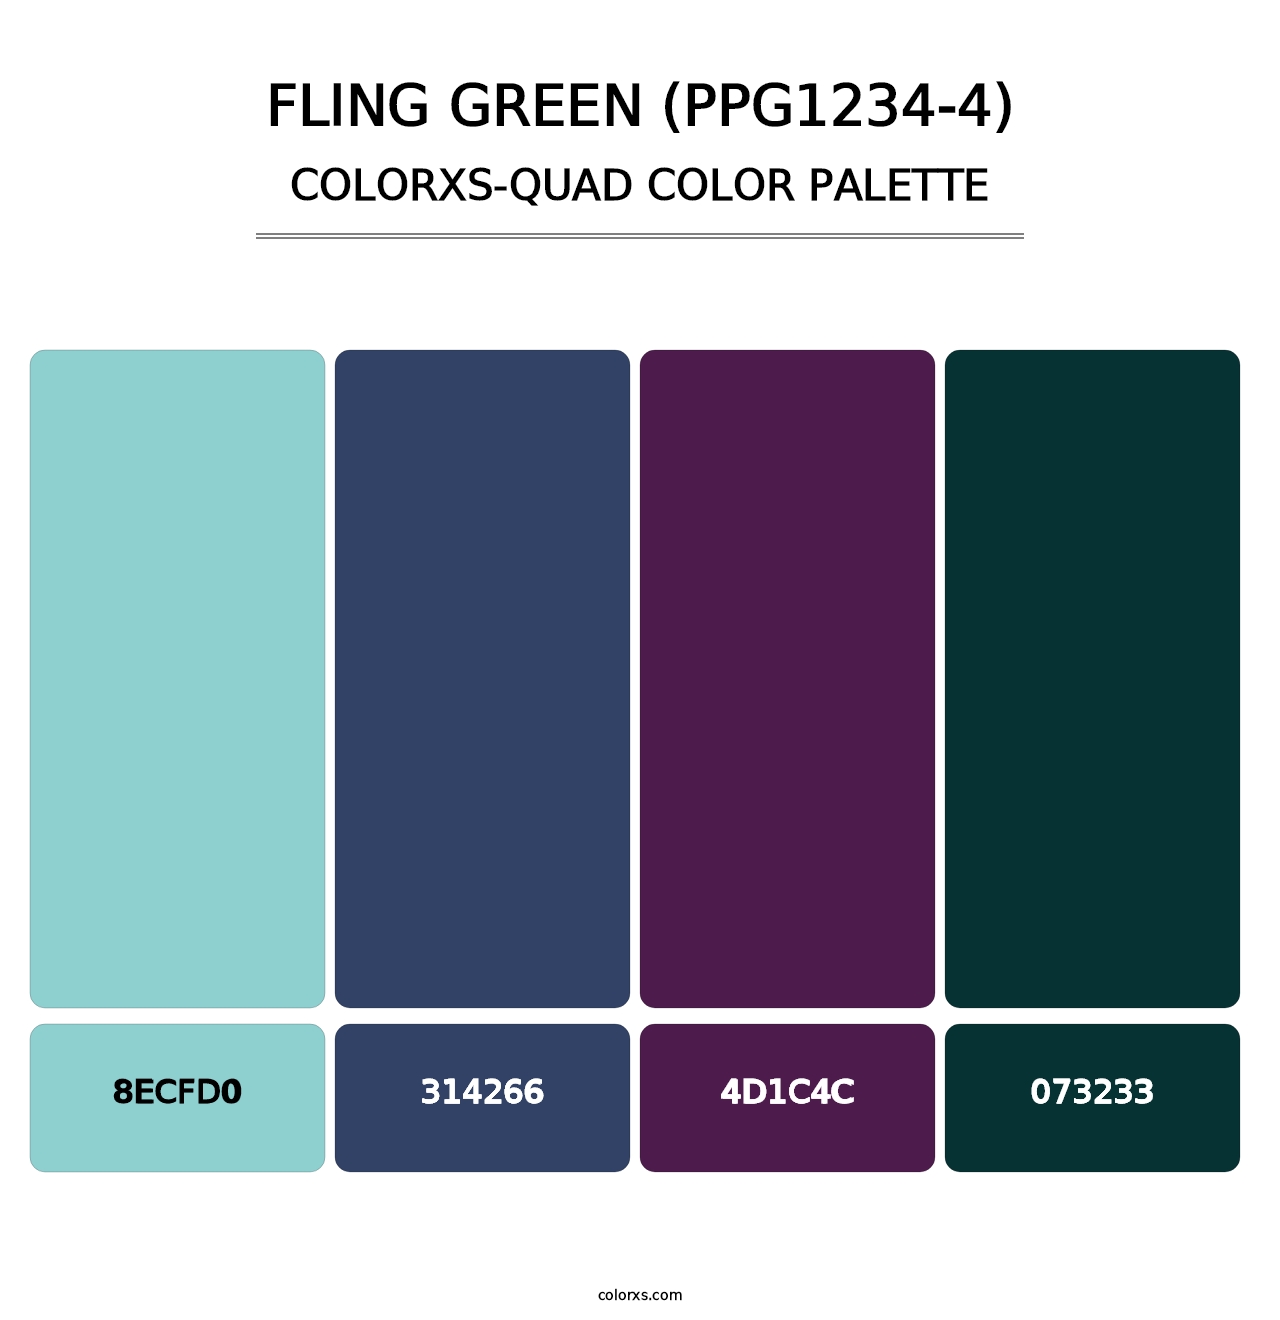 Fling Green (PPG1234-4) - Colorxs Quad Palette